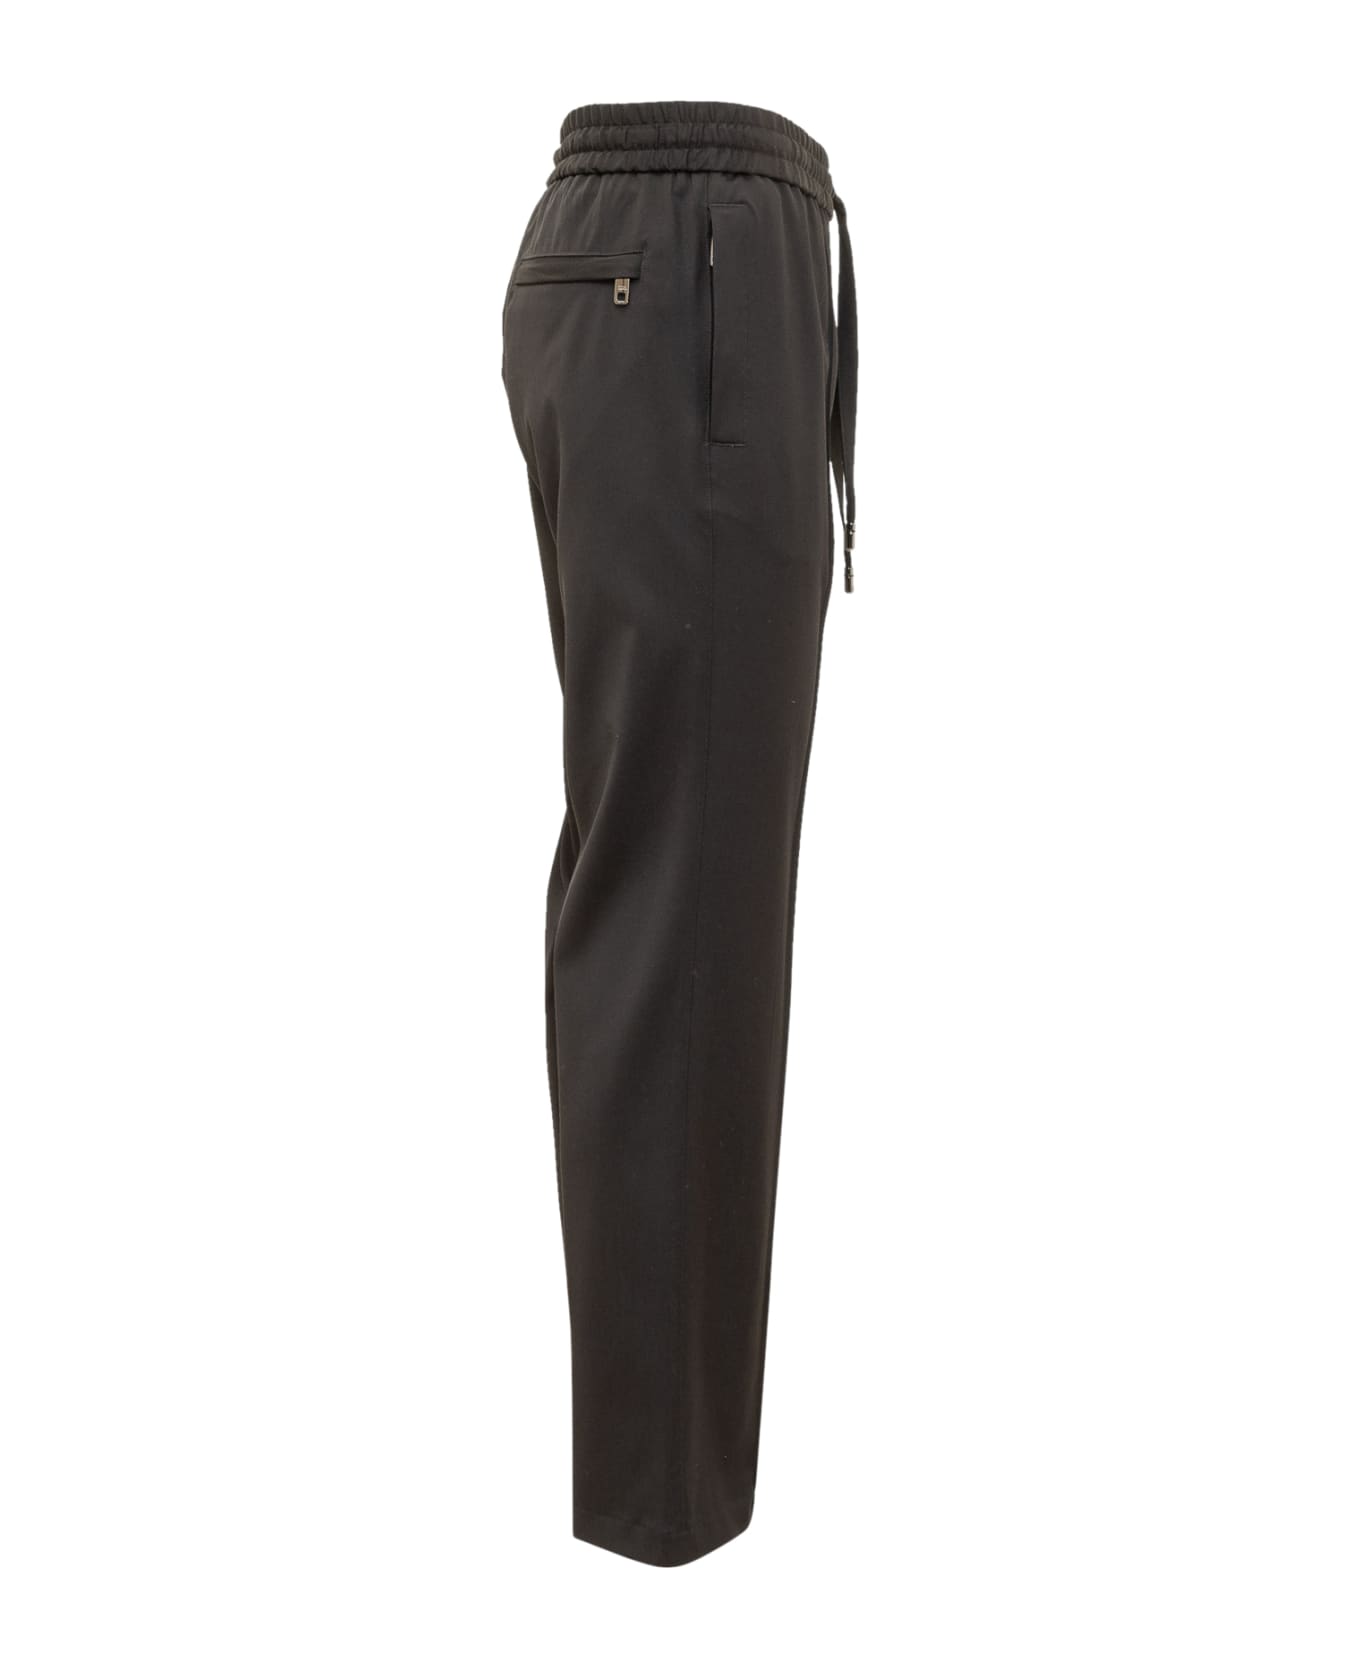 Dolce & Gabbana Tailored Trousers - NERO